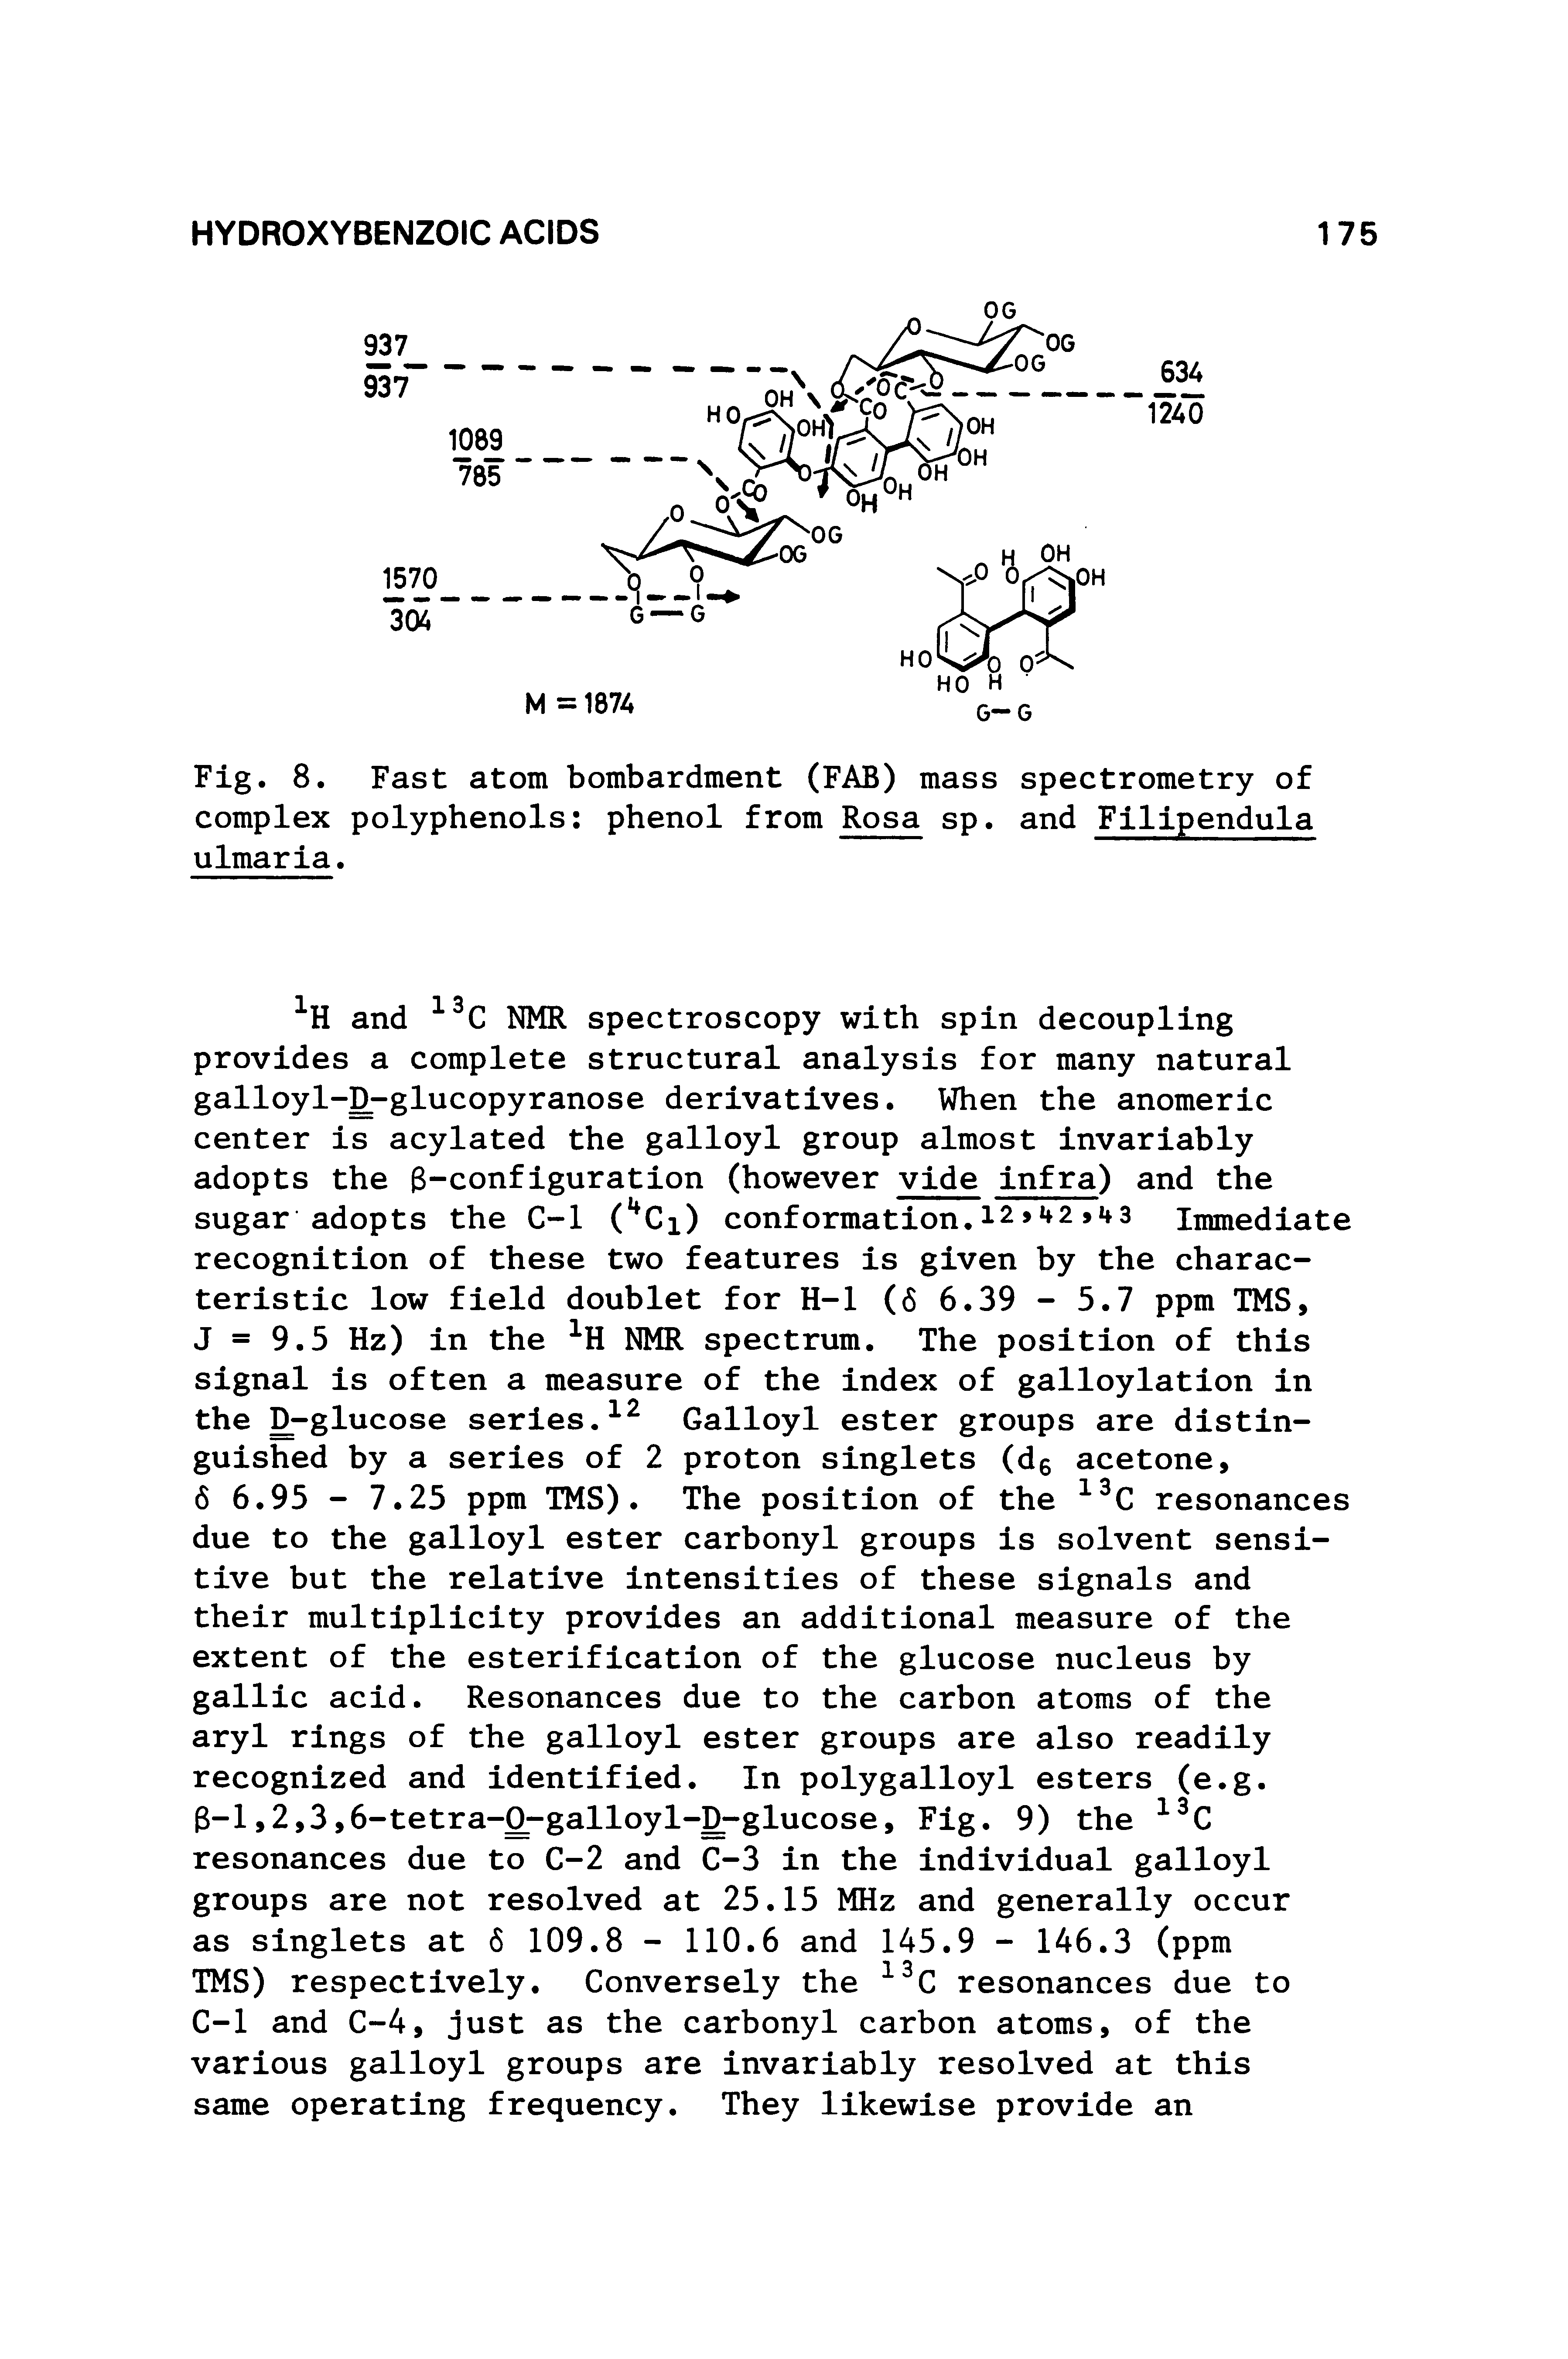 Fig. 8. Fast atom bombardment (FAB) mass spectrometry of complex polyphenols phenol from Rosa sp. and Filipendula ulmaria.